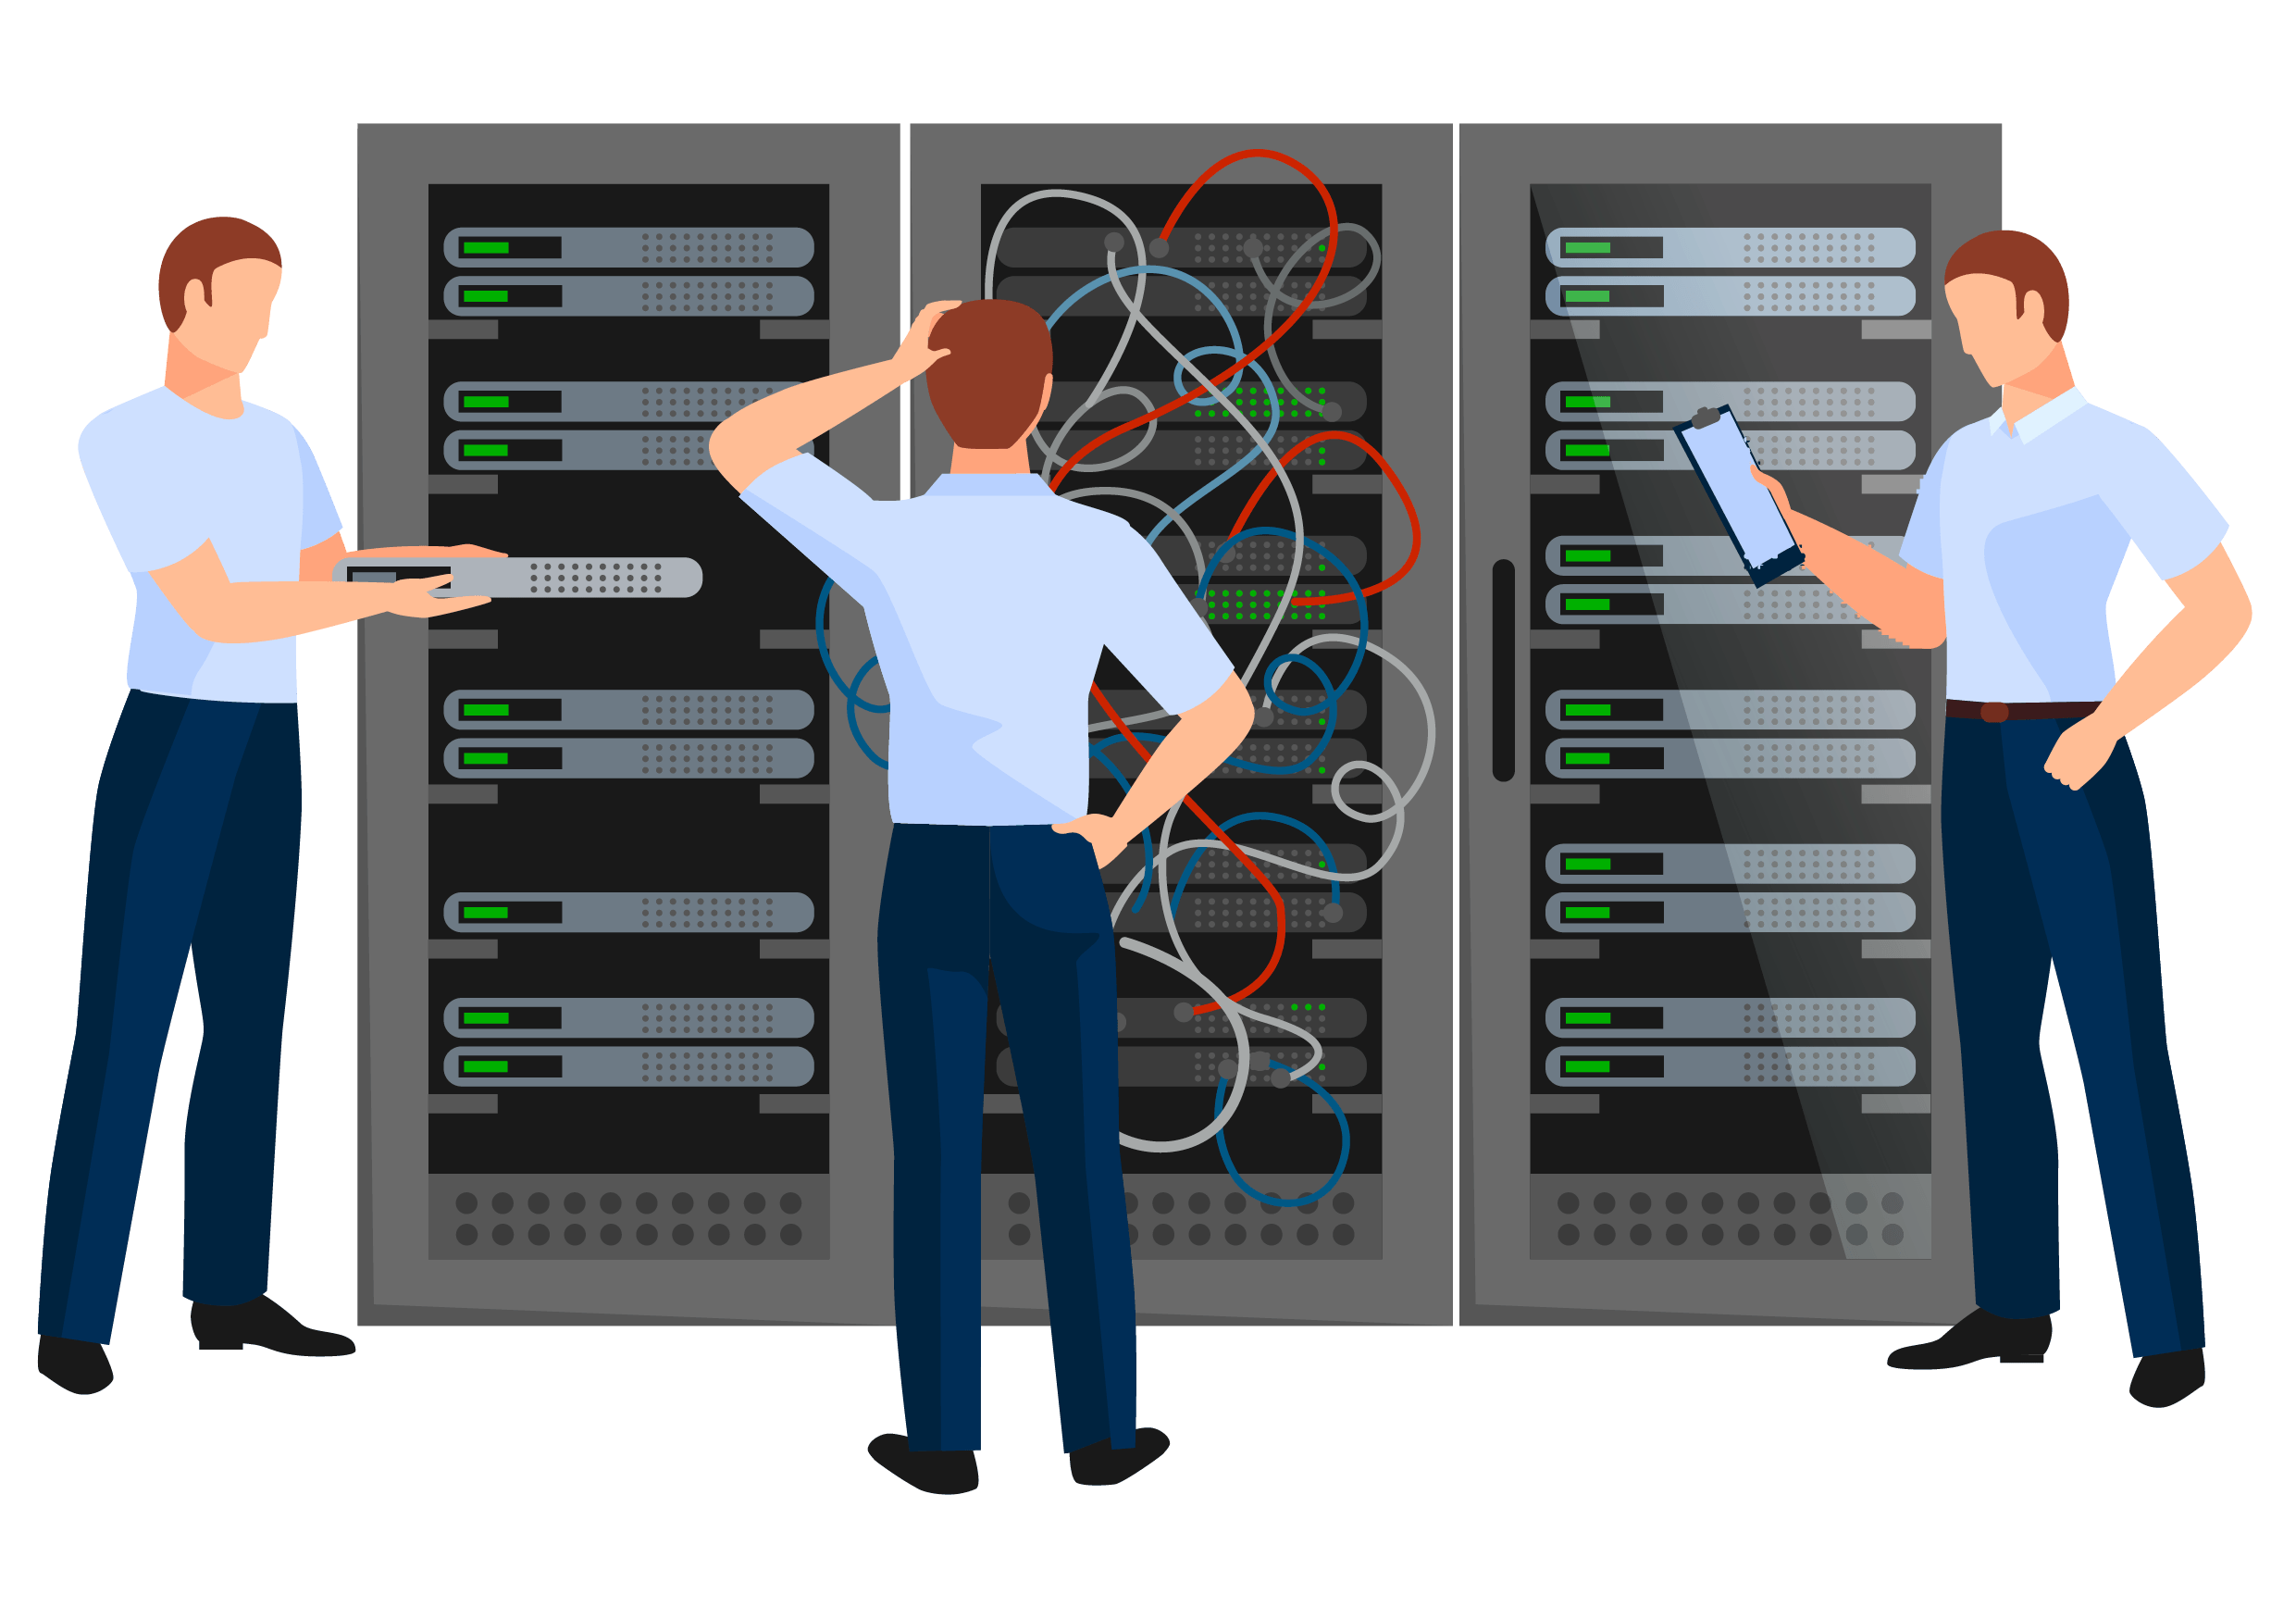 data center hosting checklist clipart